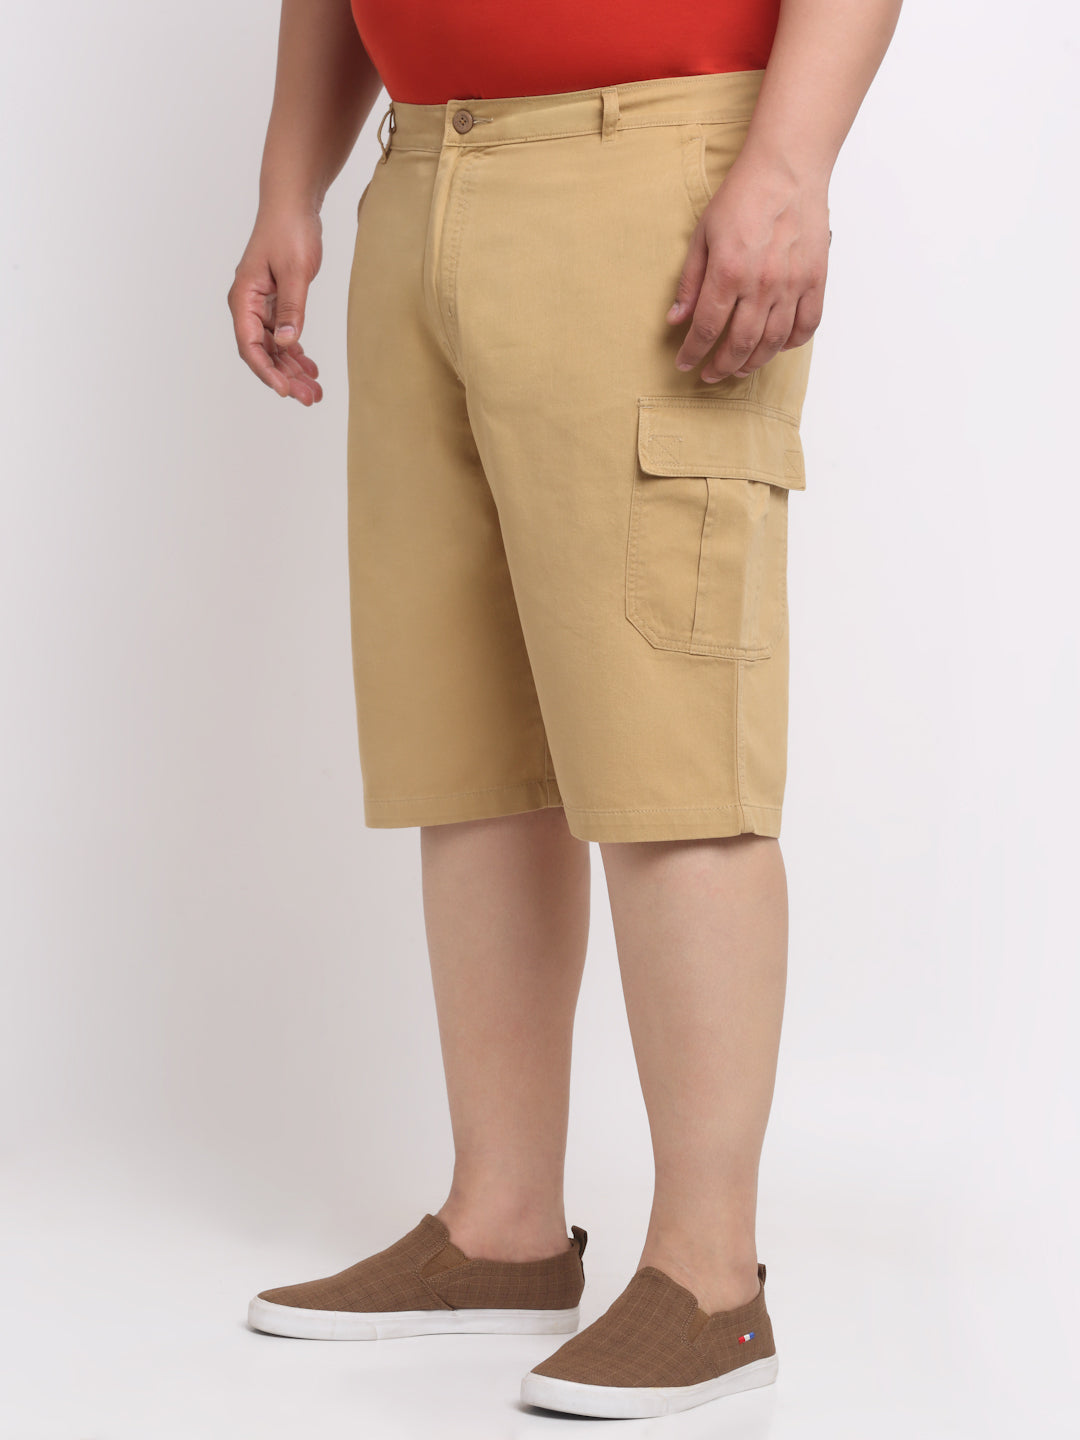 plusS Men Plus Size Khaki Mid Rise Cotton Shorts